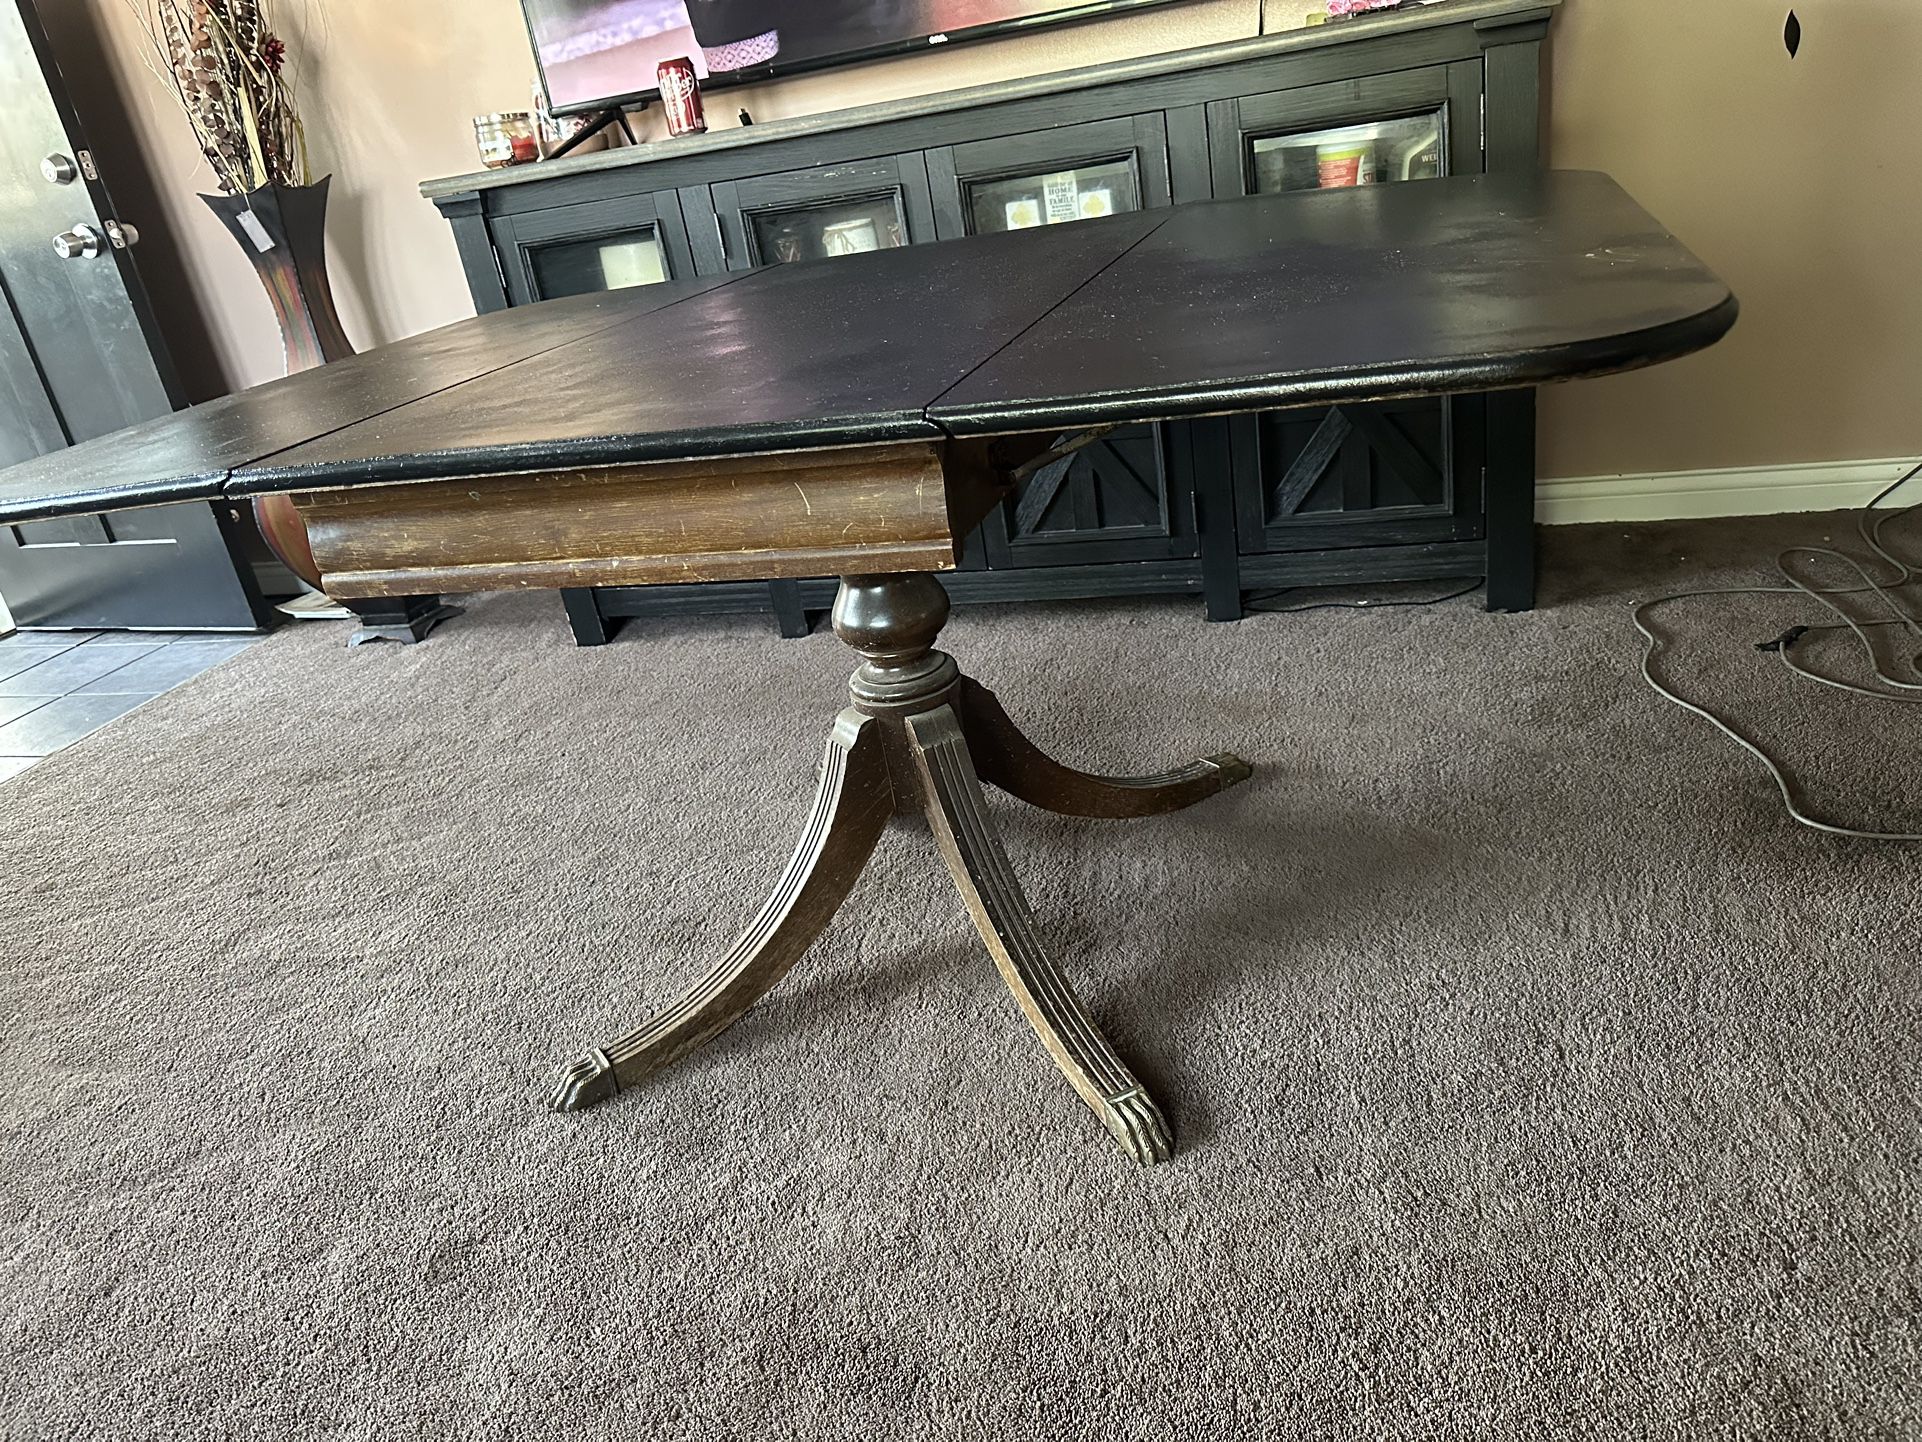 antic vintage table